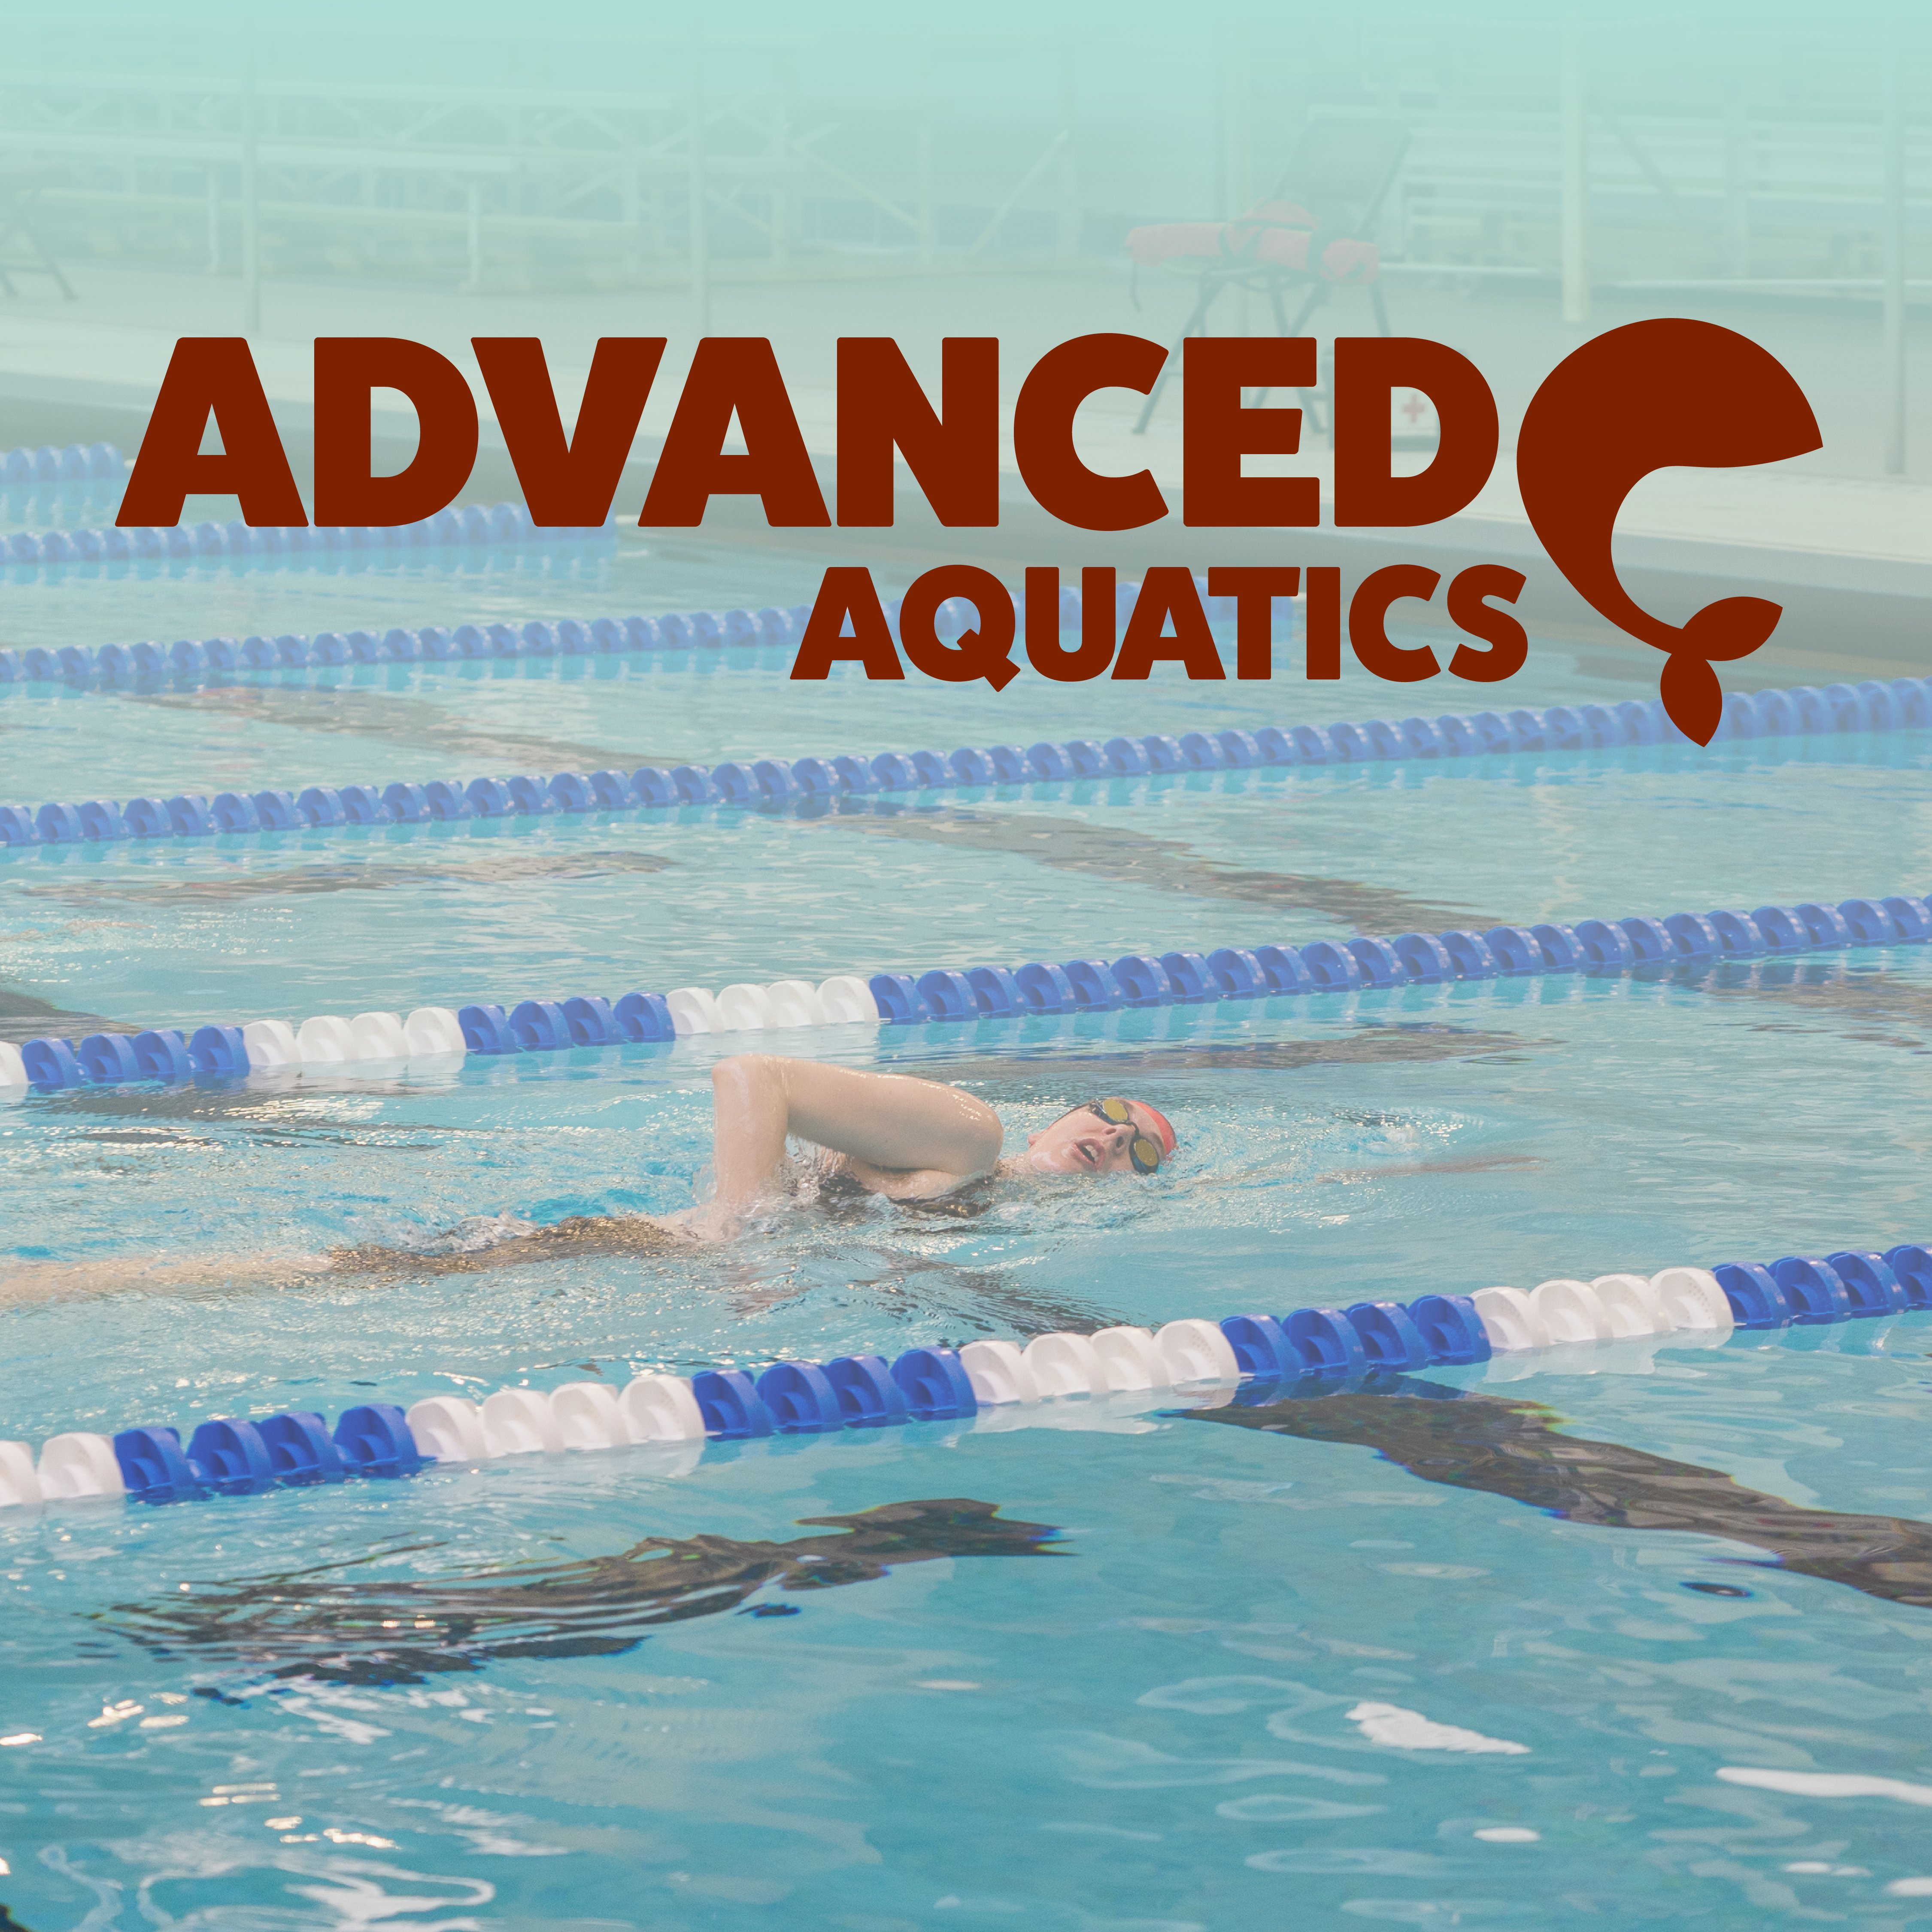 swimmer swimming in swimming lane with text "Advanced Aquatics"